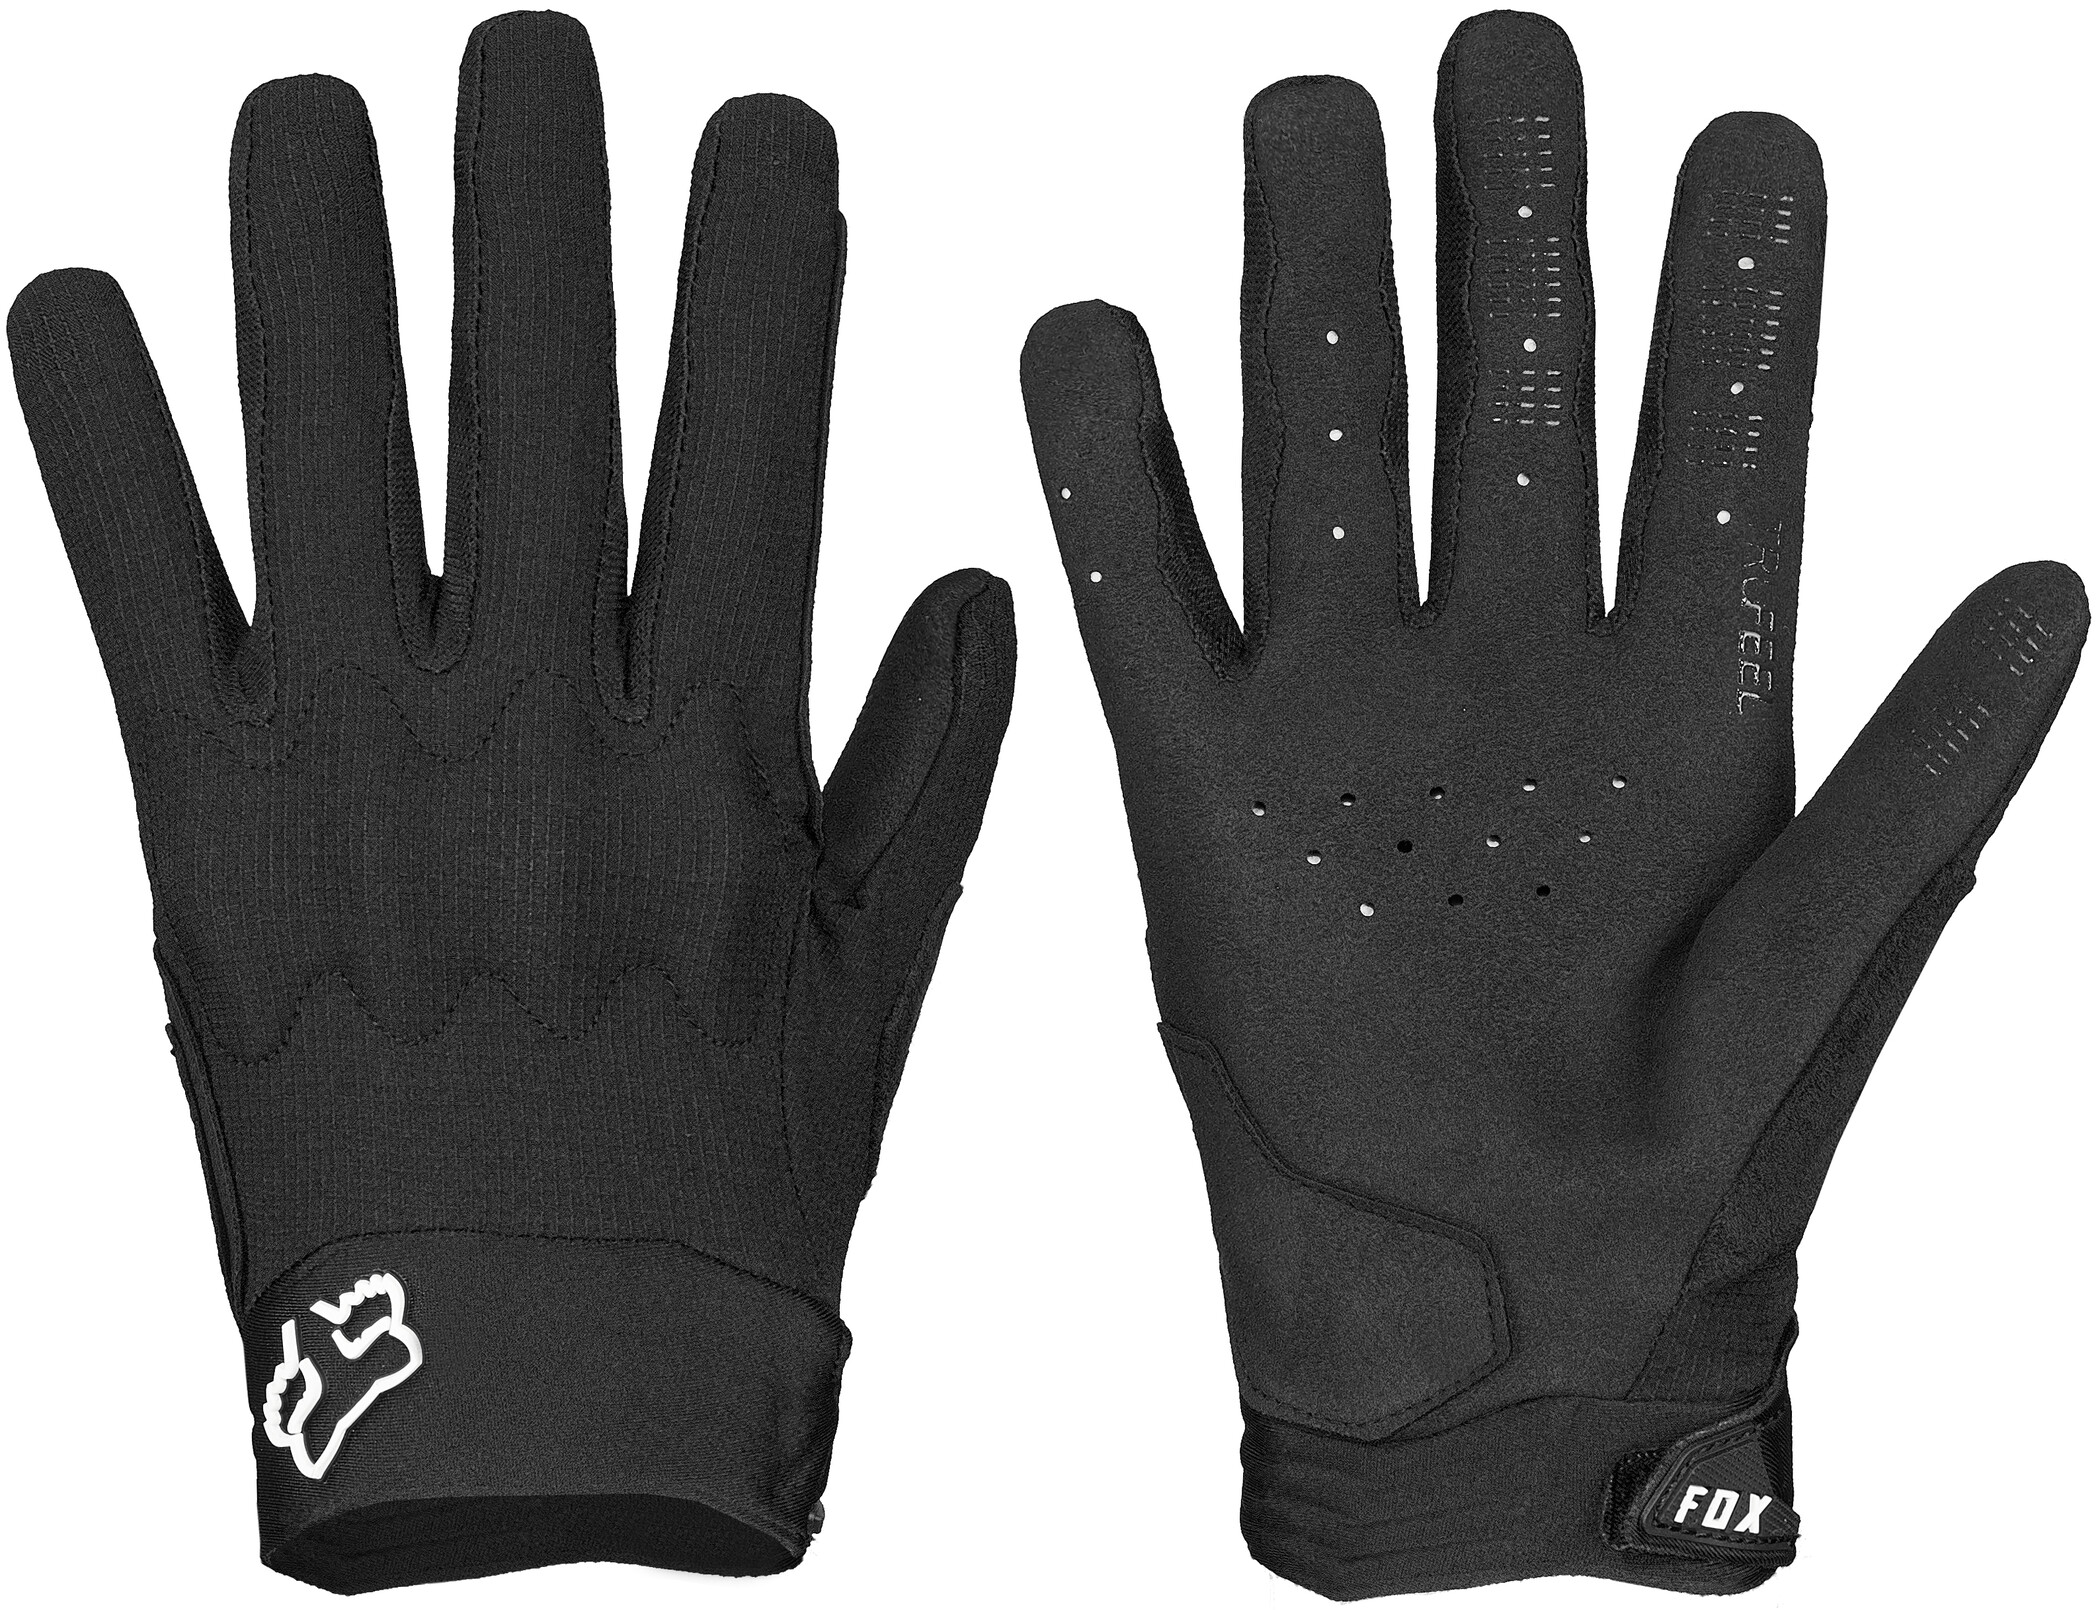 Giro GIRO Winter Handschuhe Fahrradhandschuhe Warm Wasserdicht Winddicht Touchscreen 